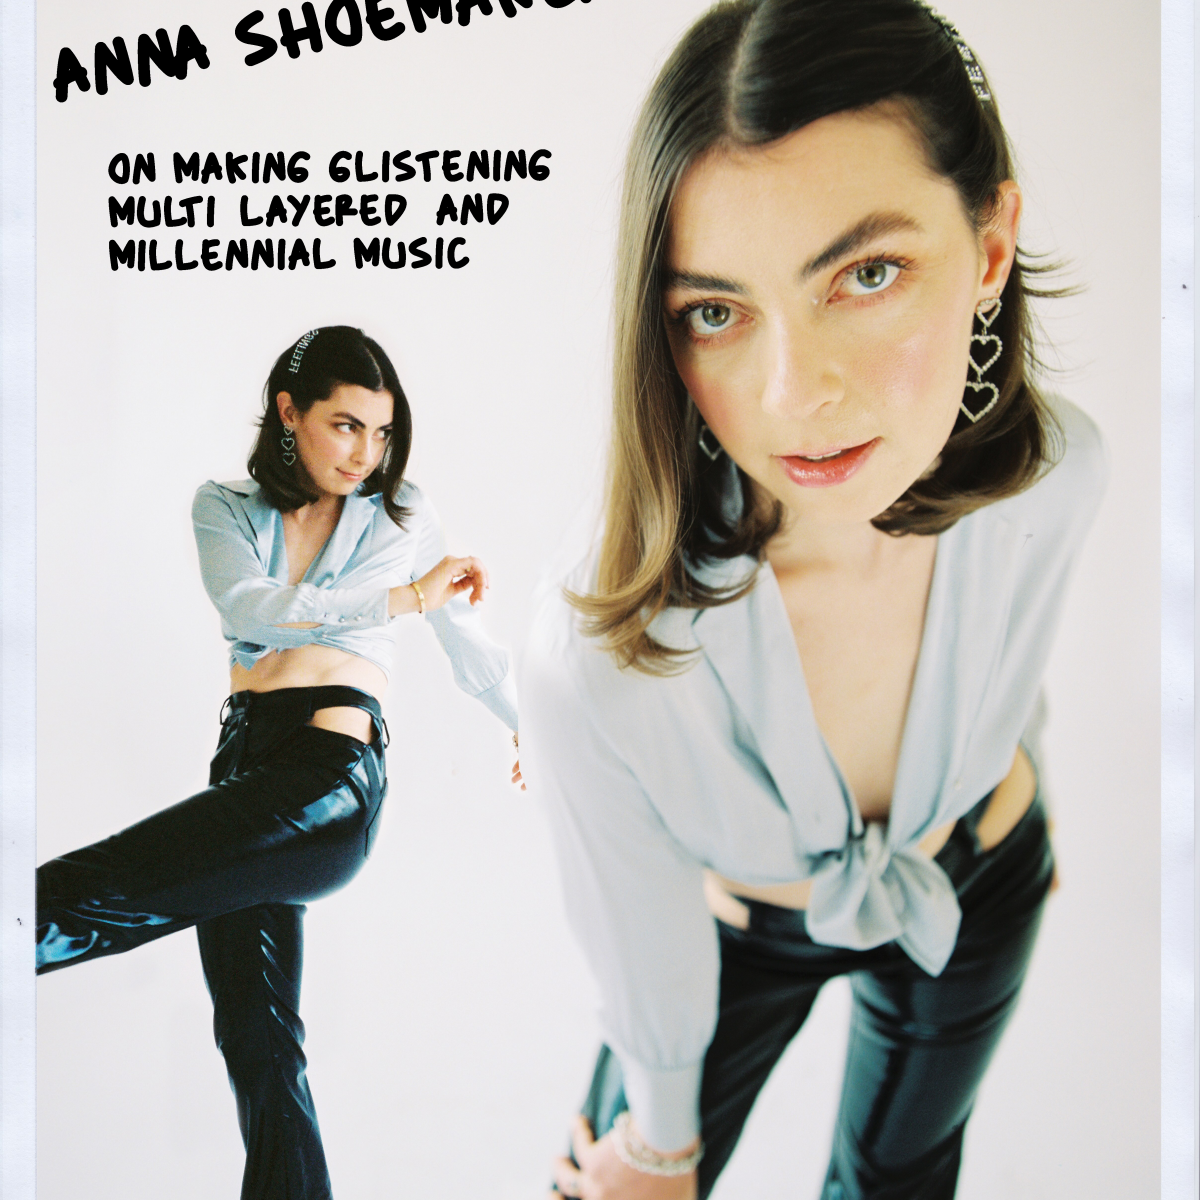 On Making Glistening, Multi-layered, and Millennial Music: Anna Shoemaker